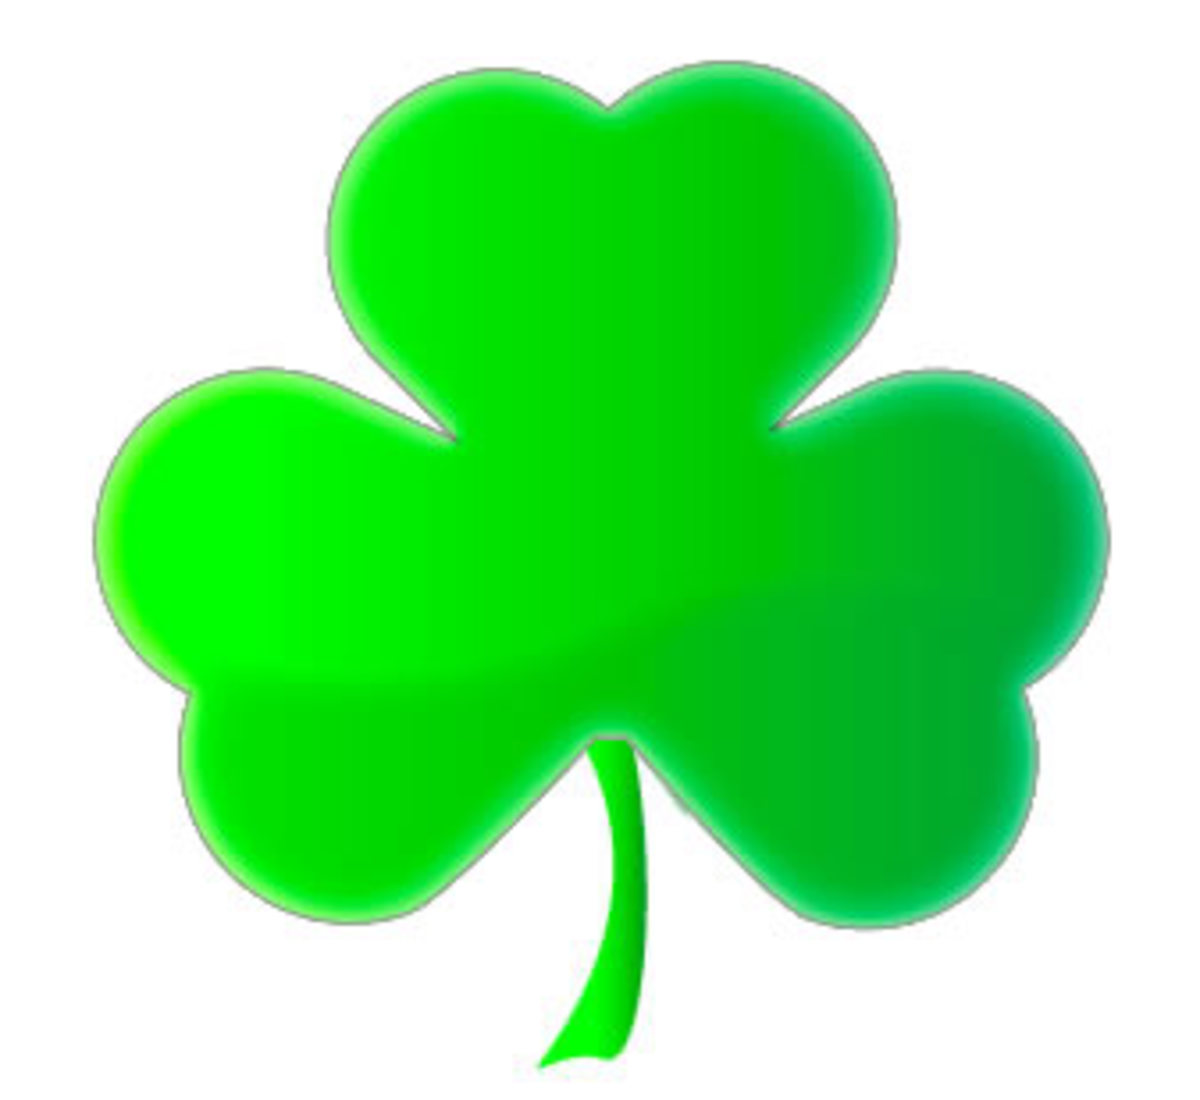 irish culture symbol of emblems Symbols of Irish The and Culture symbols ireland